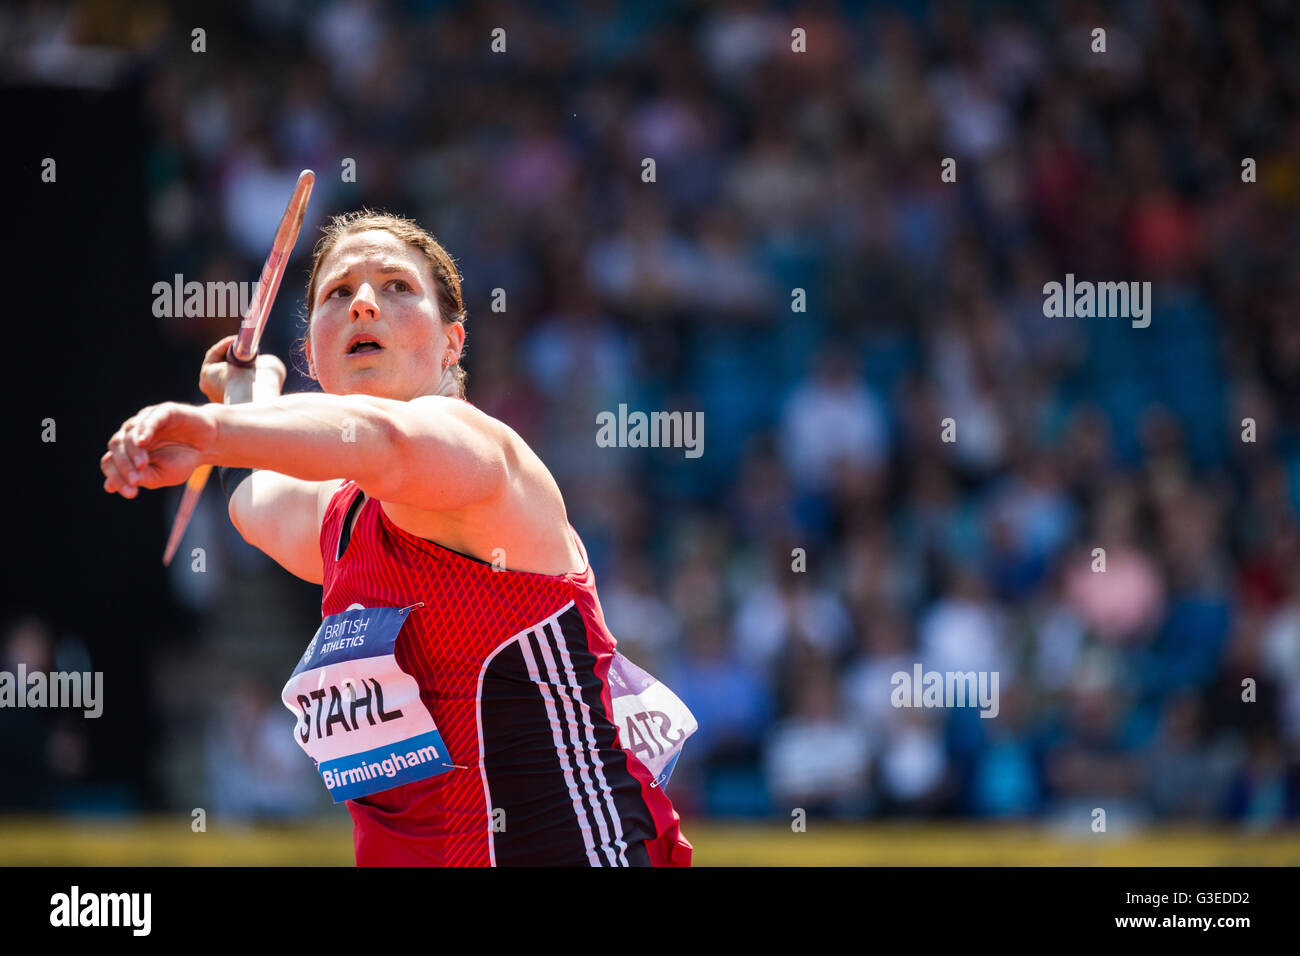 Diamond League Birmingham UK. 5th June 2016. German athlete Linda Stahl competes in the javelin throw. Stock Photo